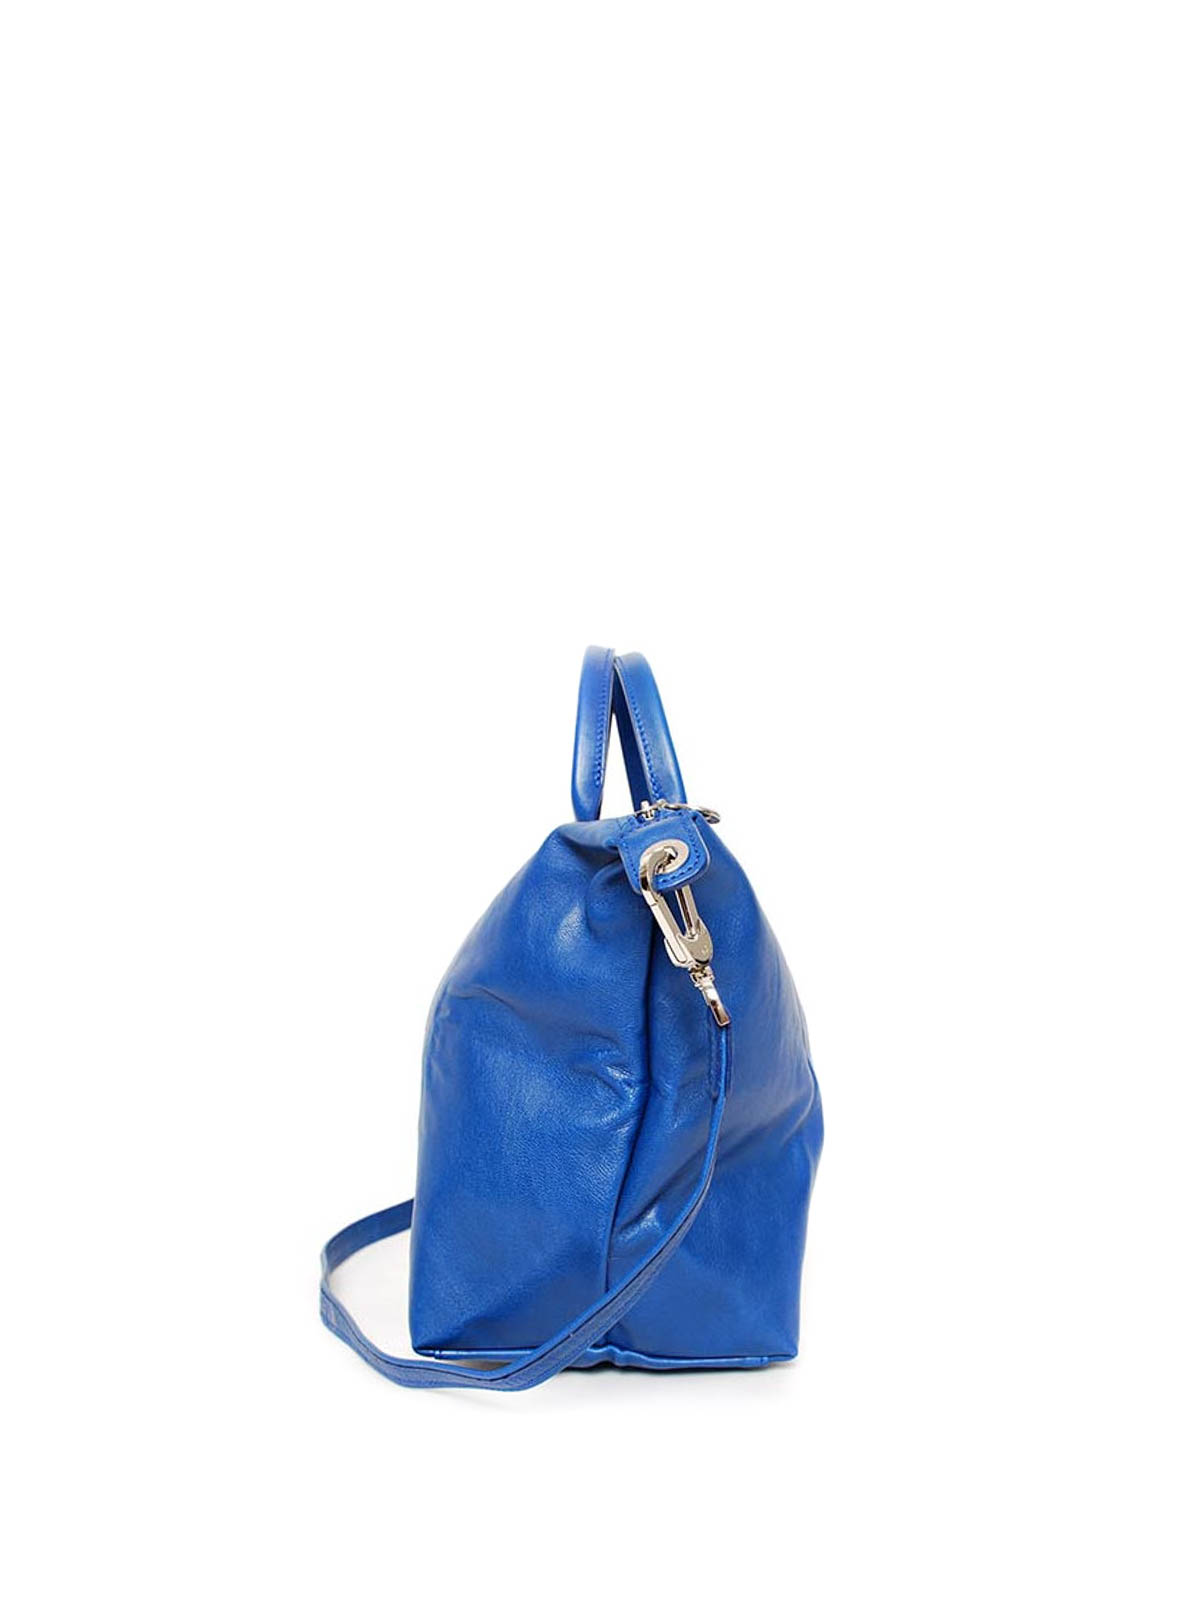 Totes bags Longchamp - Le Pliage Cuir large hand bag - 1515737045